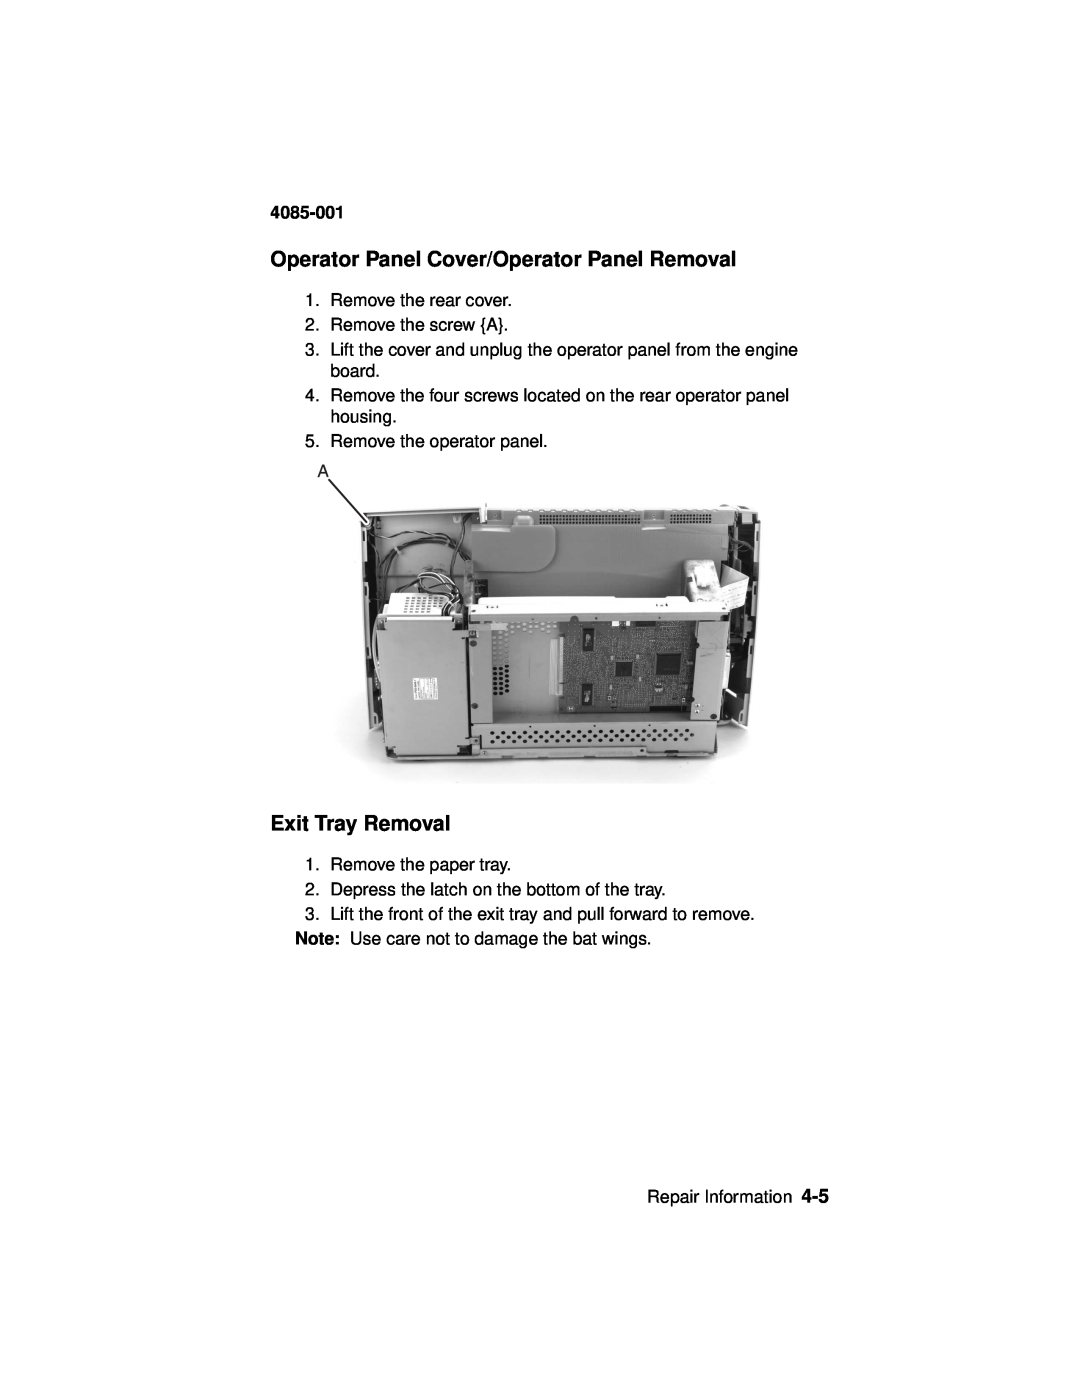 Lexmark Printer, J110 manual Operator Panel Cover/Operator Panel Removal, Exit Tray Removal, 4085-001 